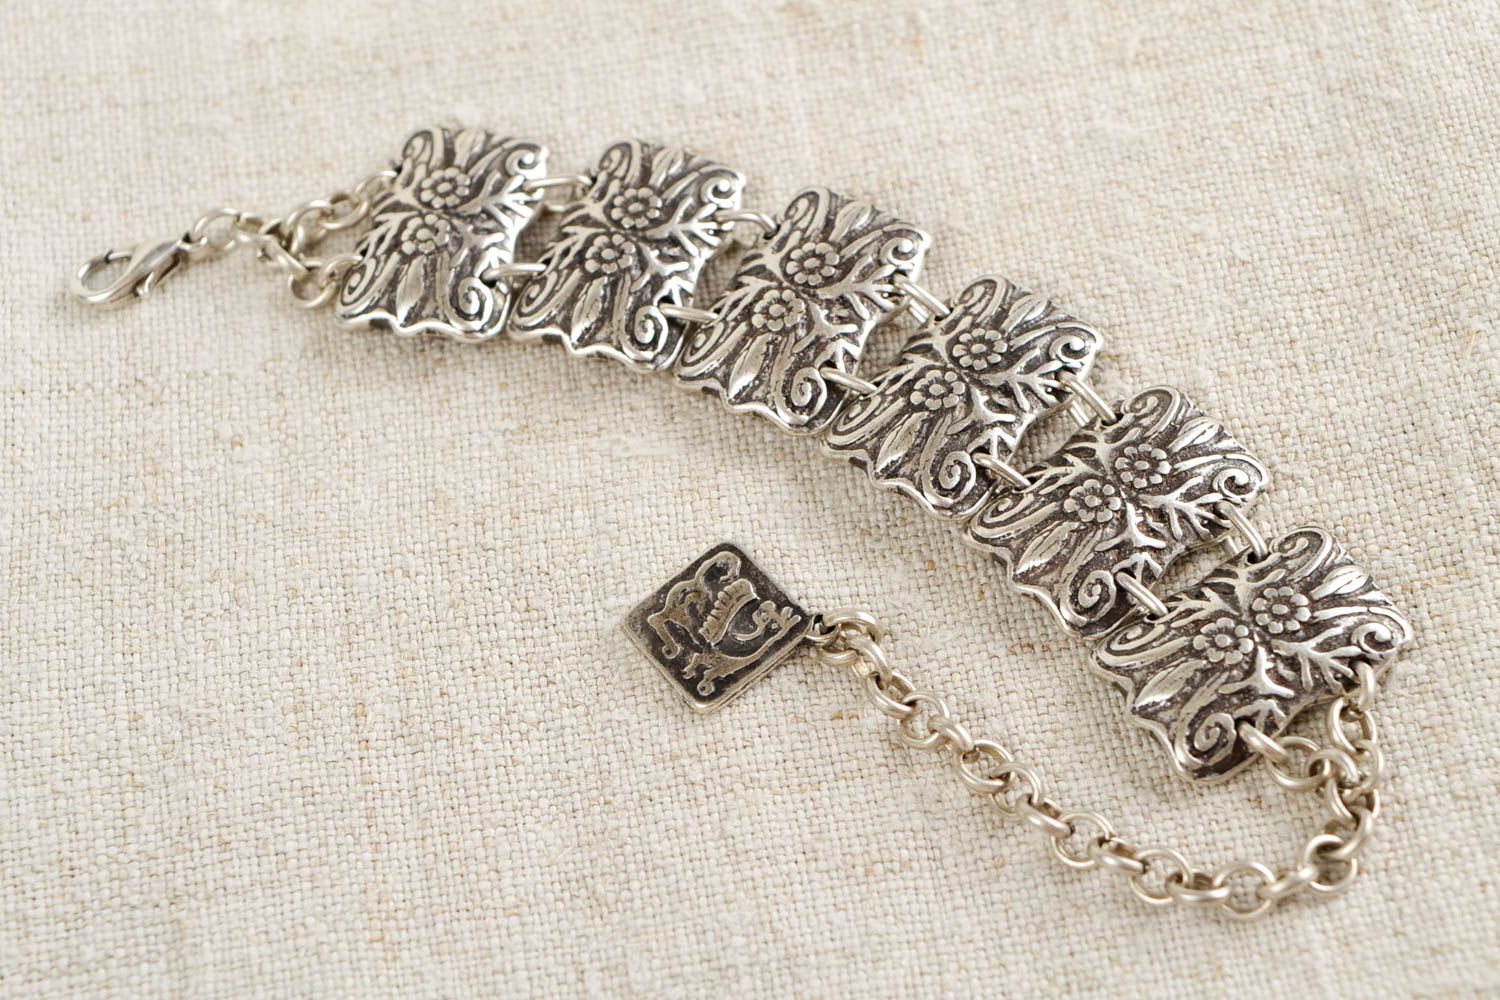 Stylish handmade metal bracelet metal craft ideas cuff bracelet designs photo 1